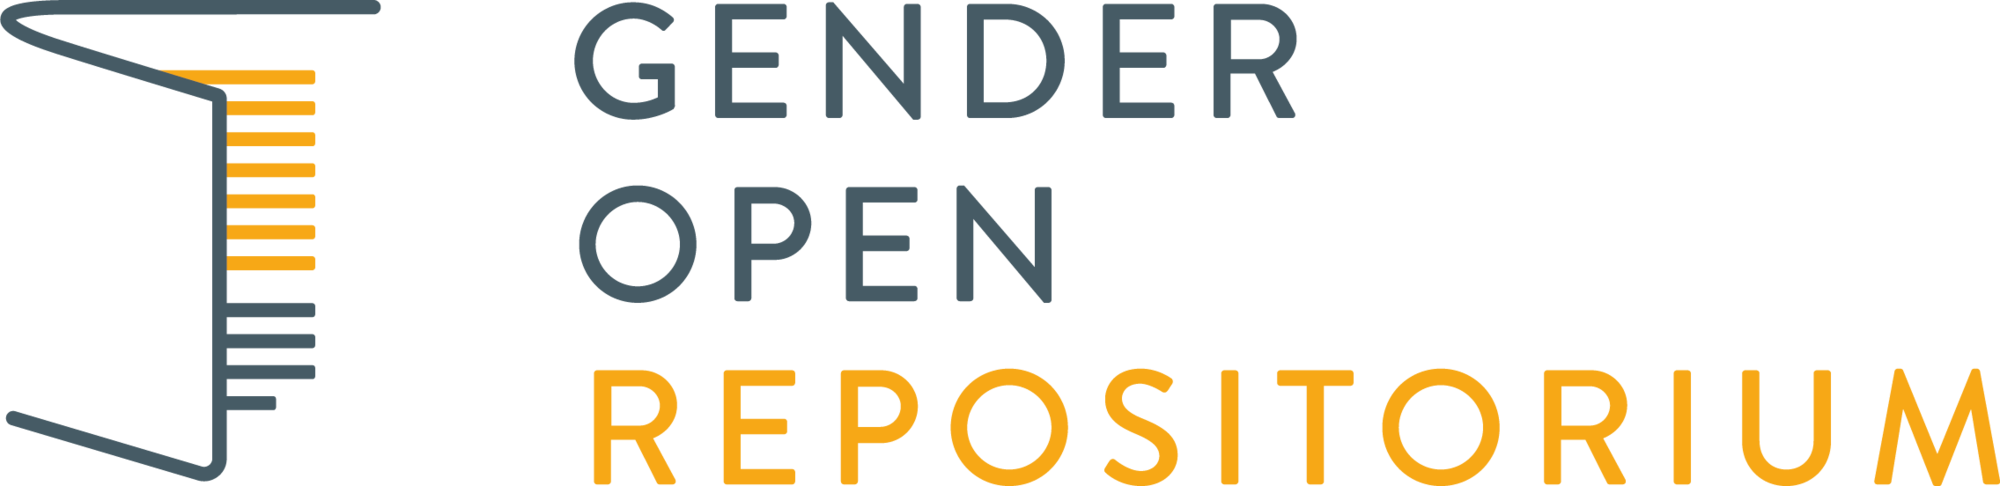 genderopenrepos_print